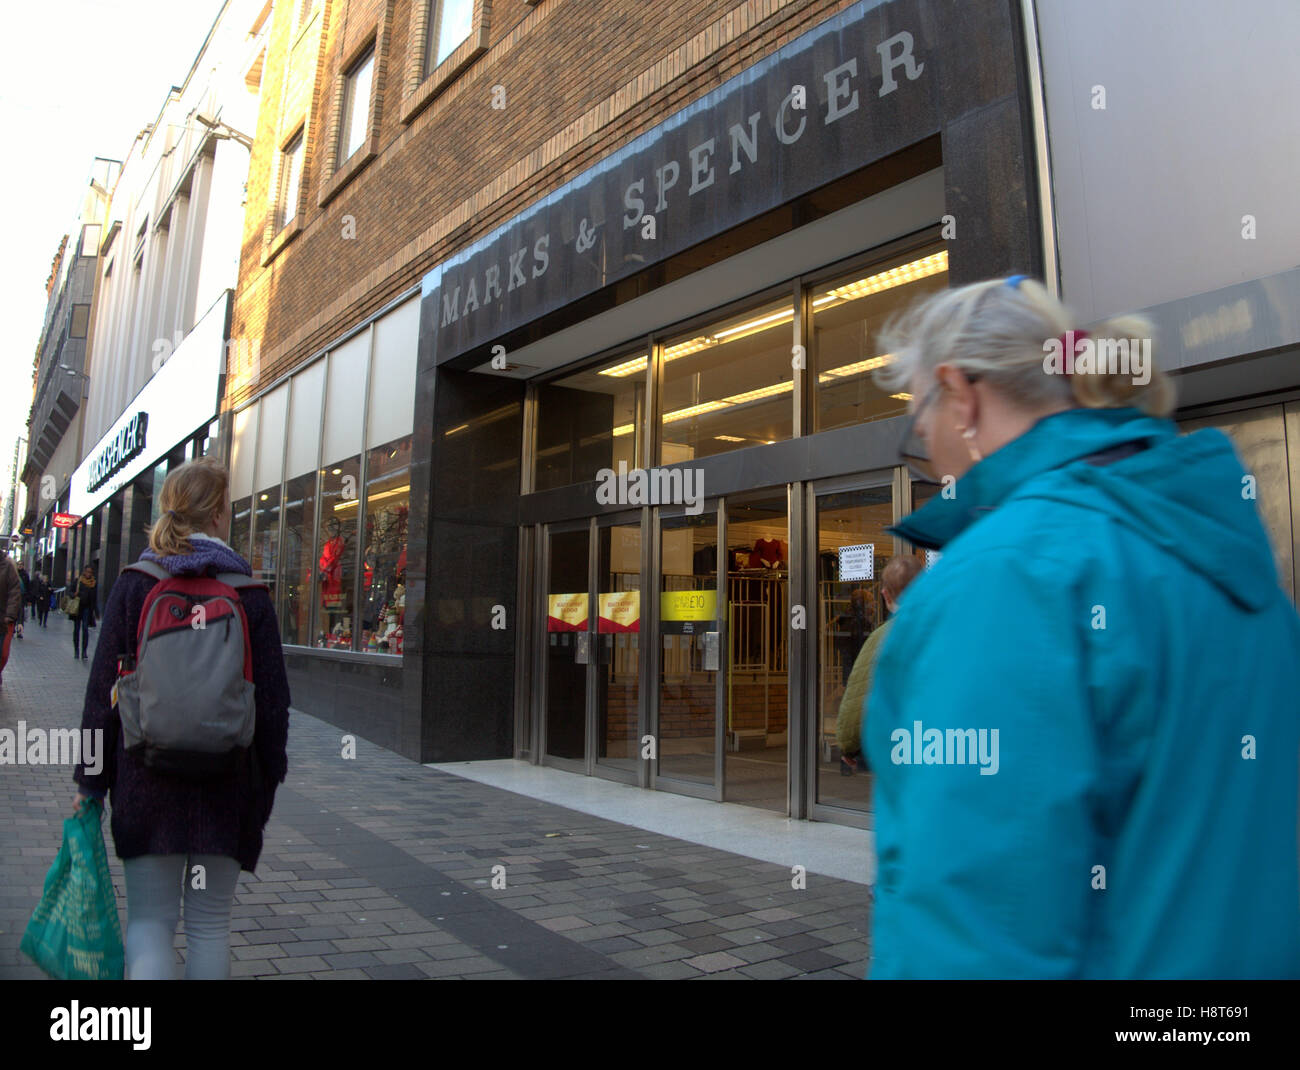 m & s markiert Spencer Shop Sauchiehall street glasgow Stockfoto